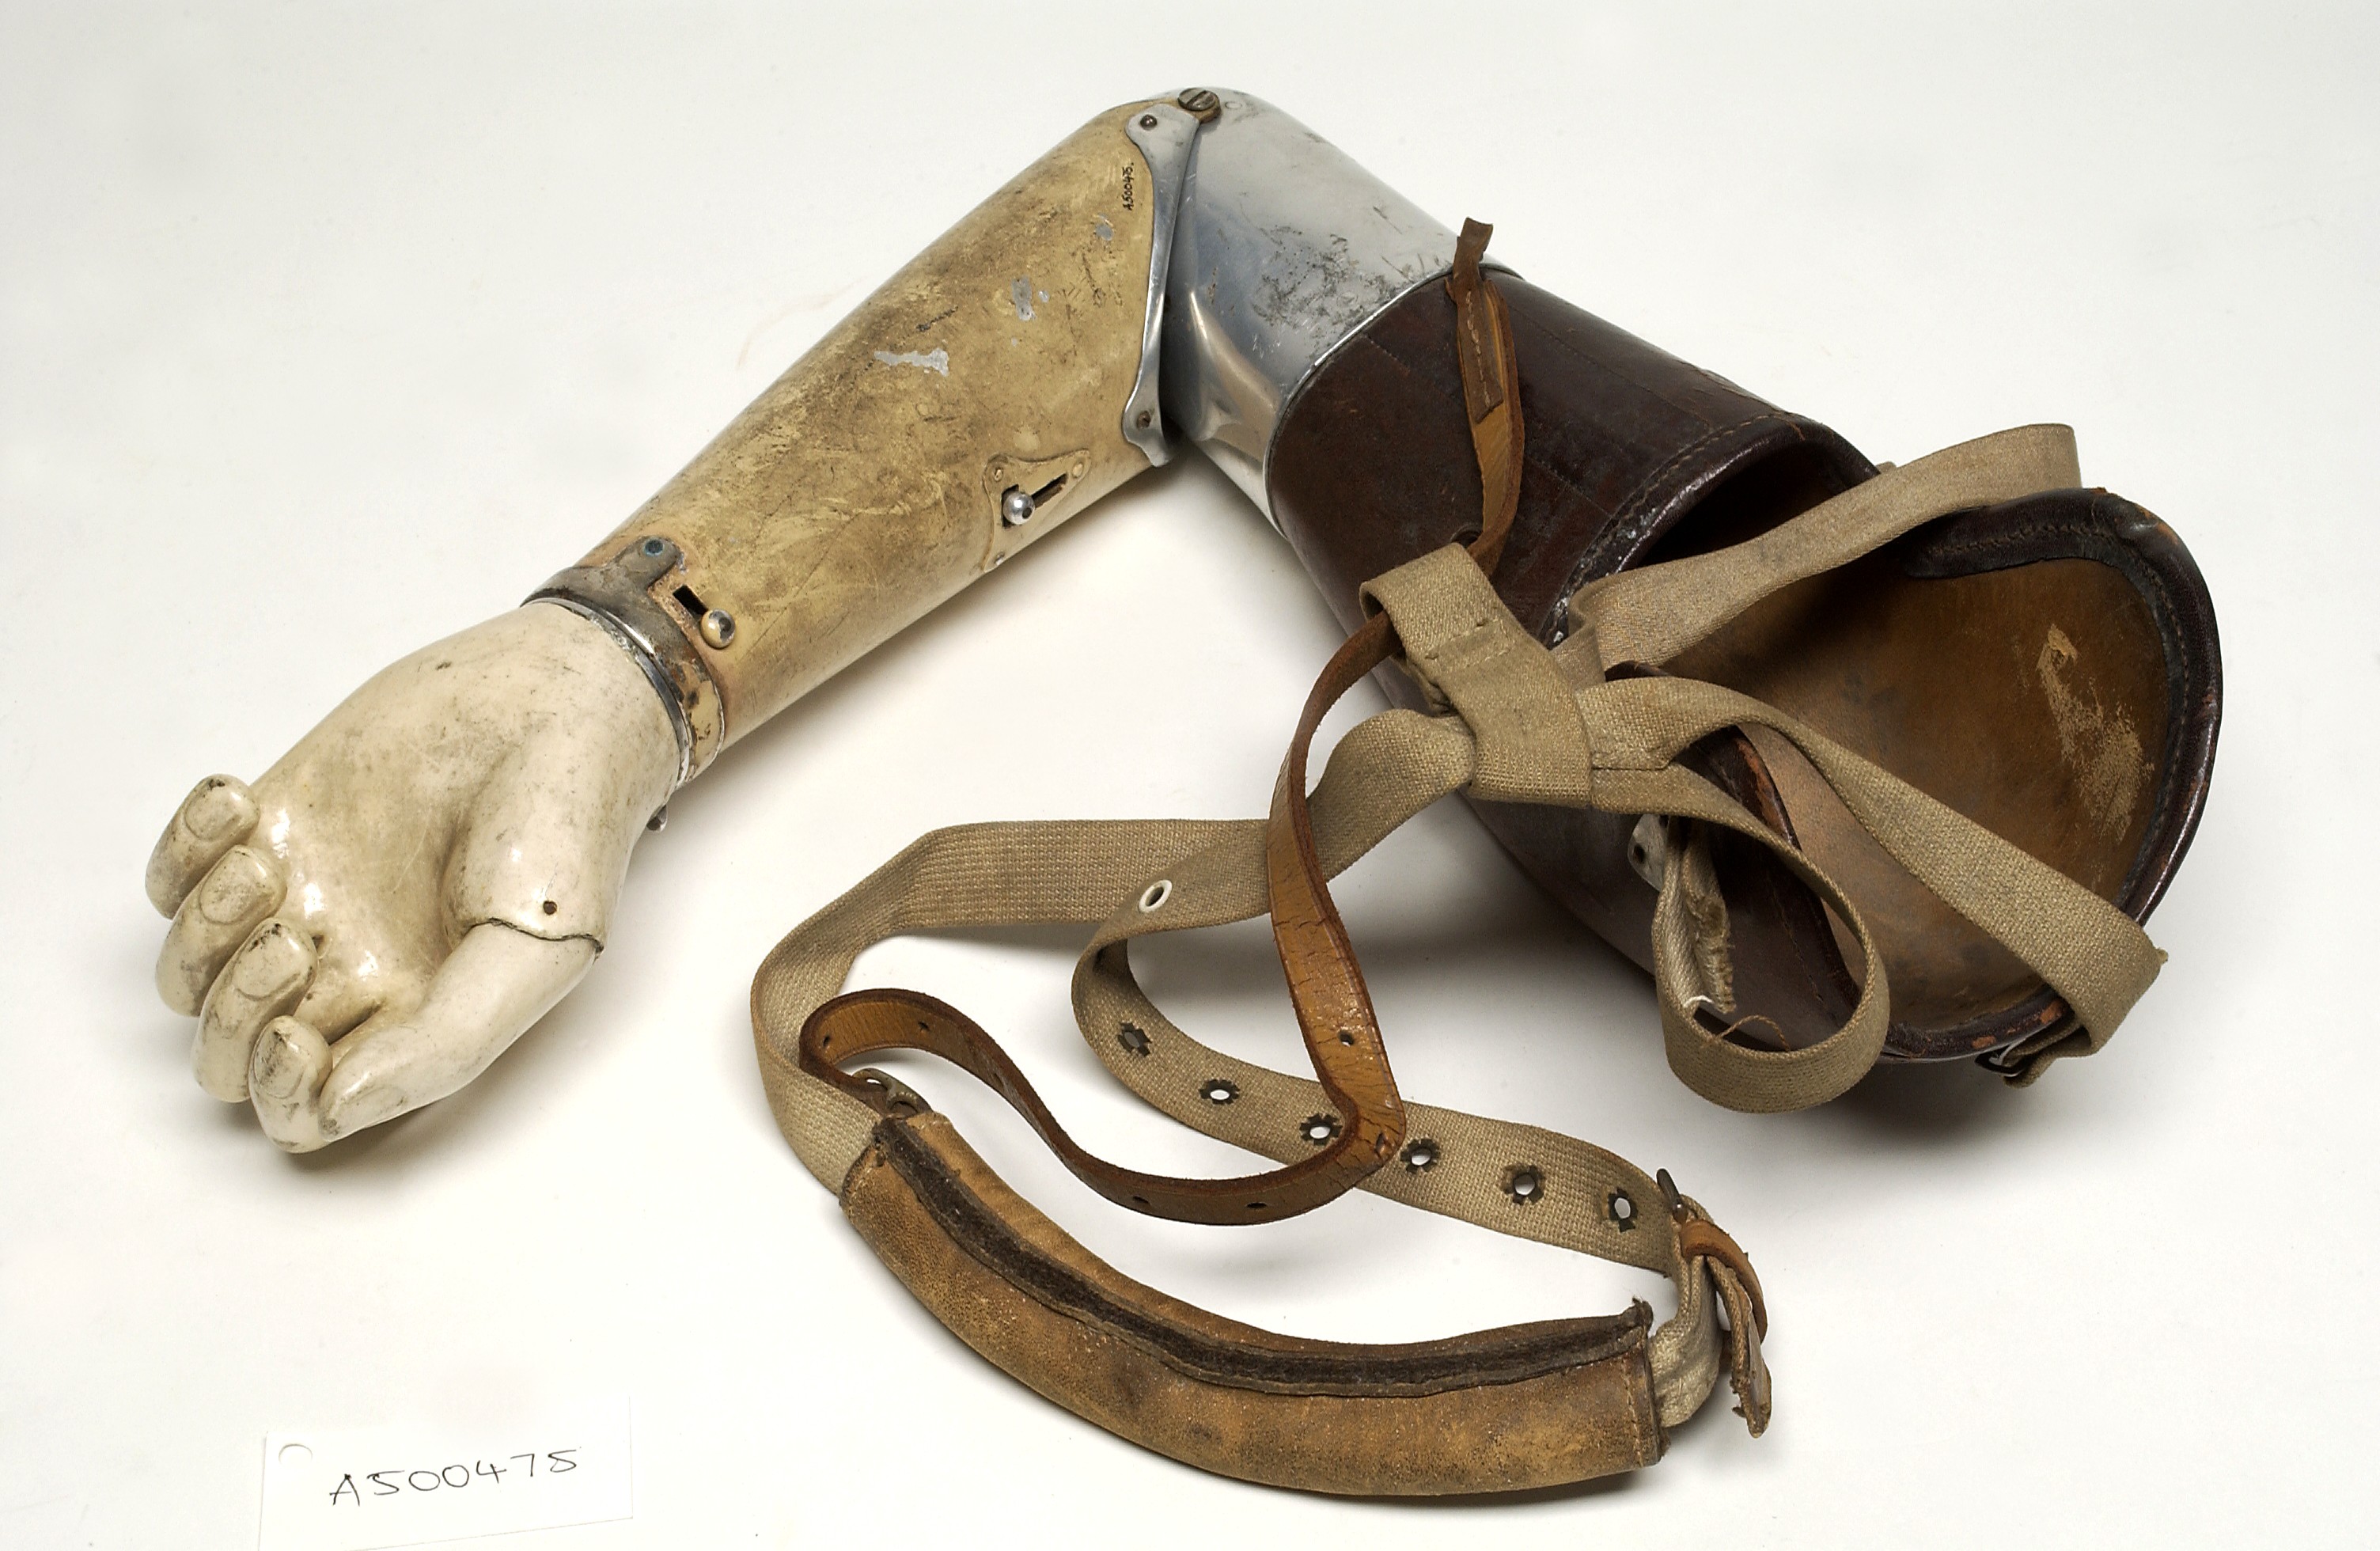 Nineteenth-century prosthetic arm